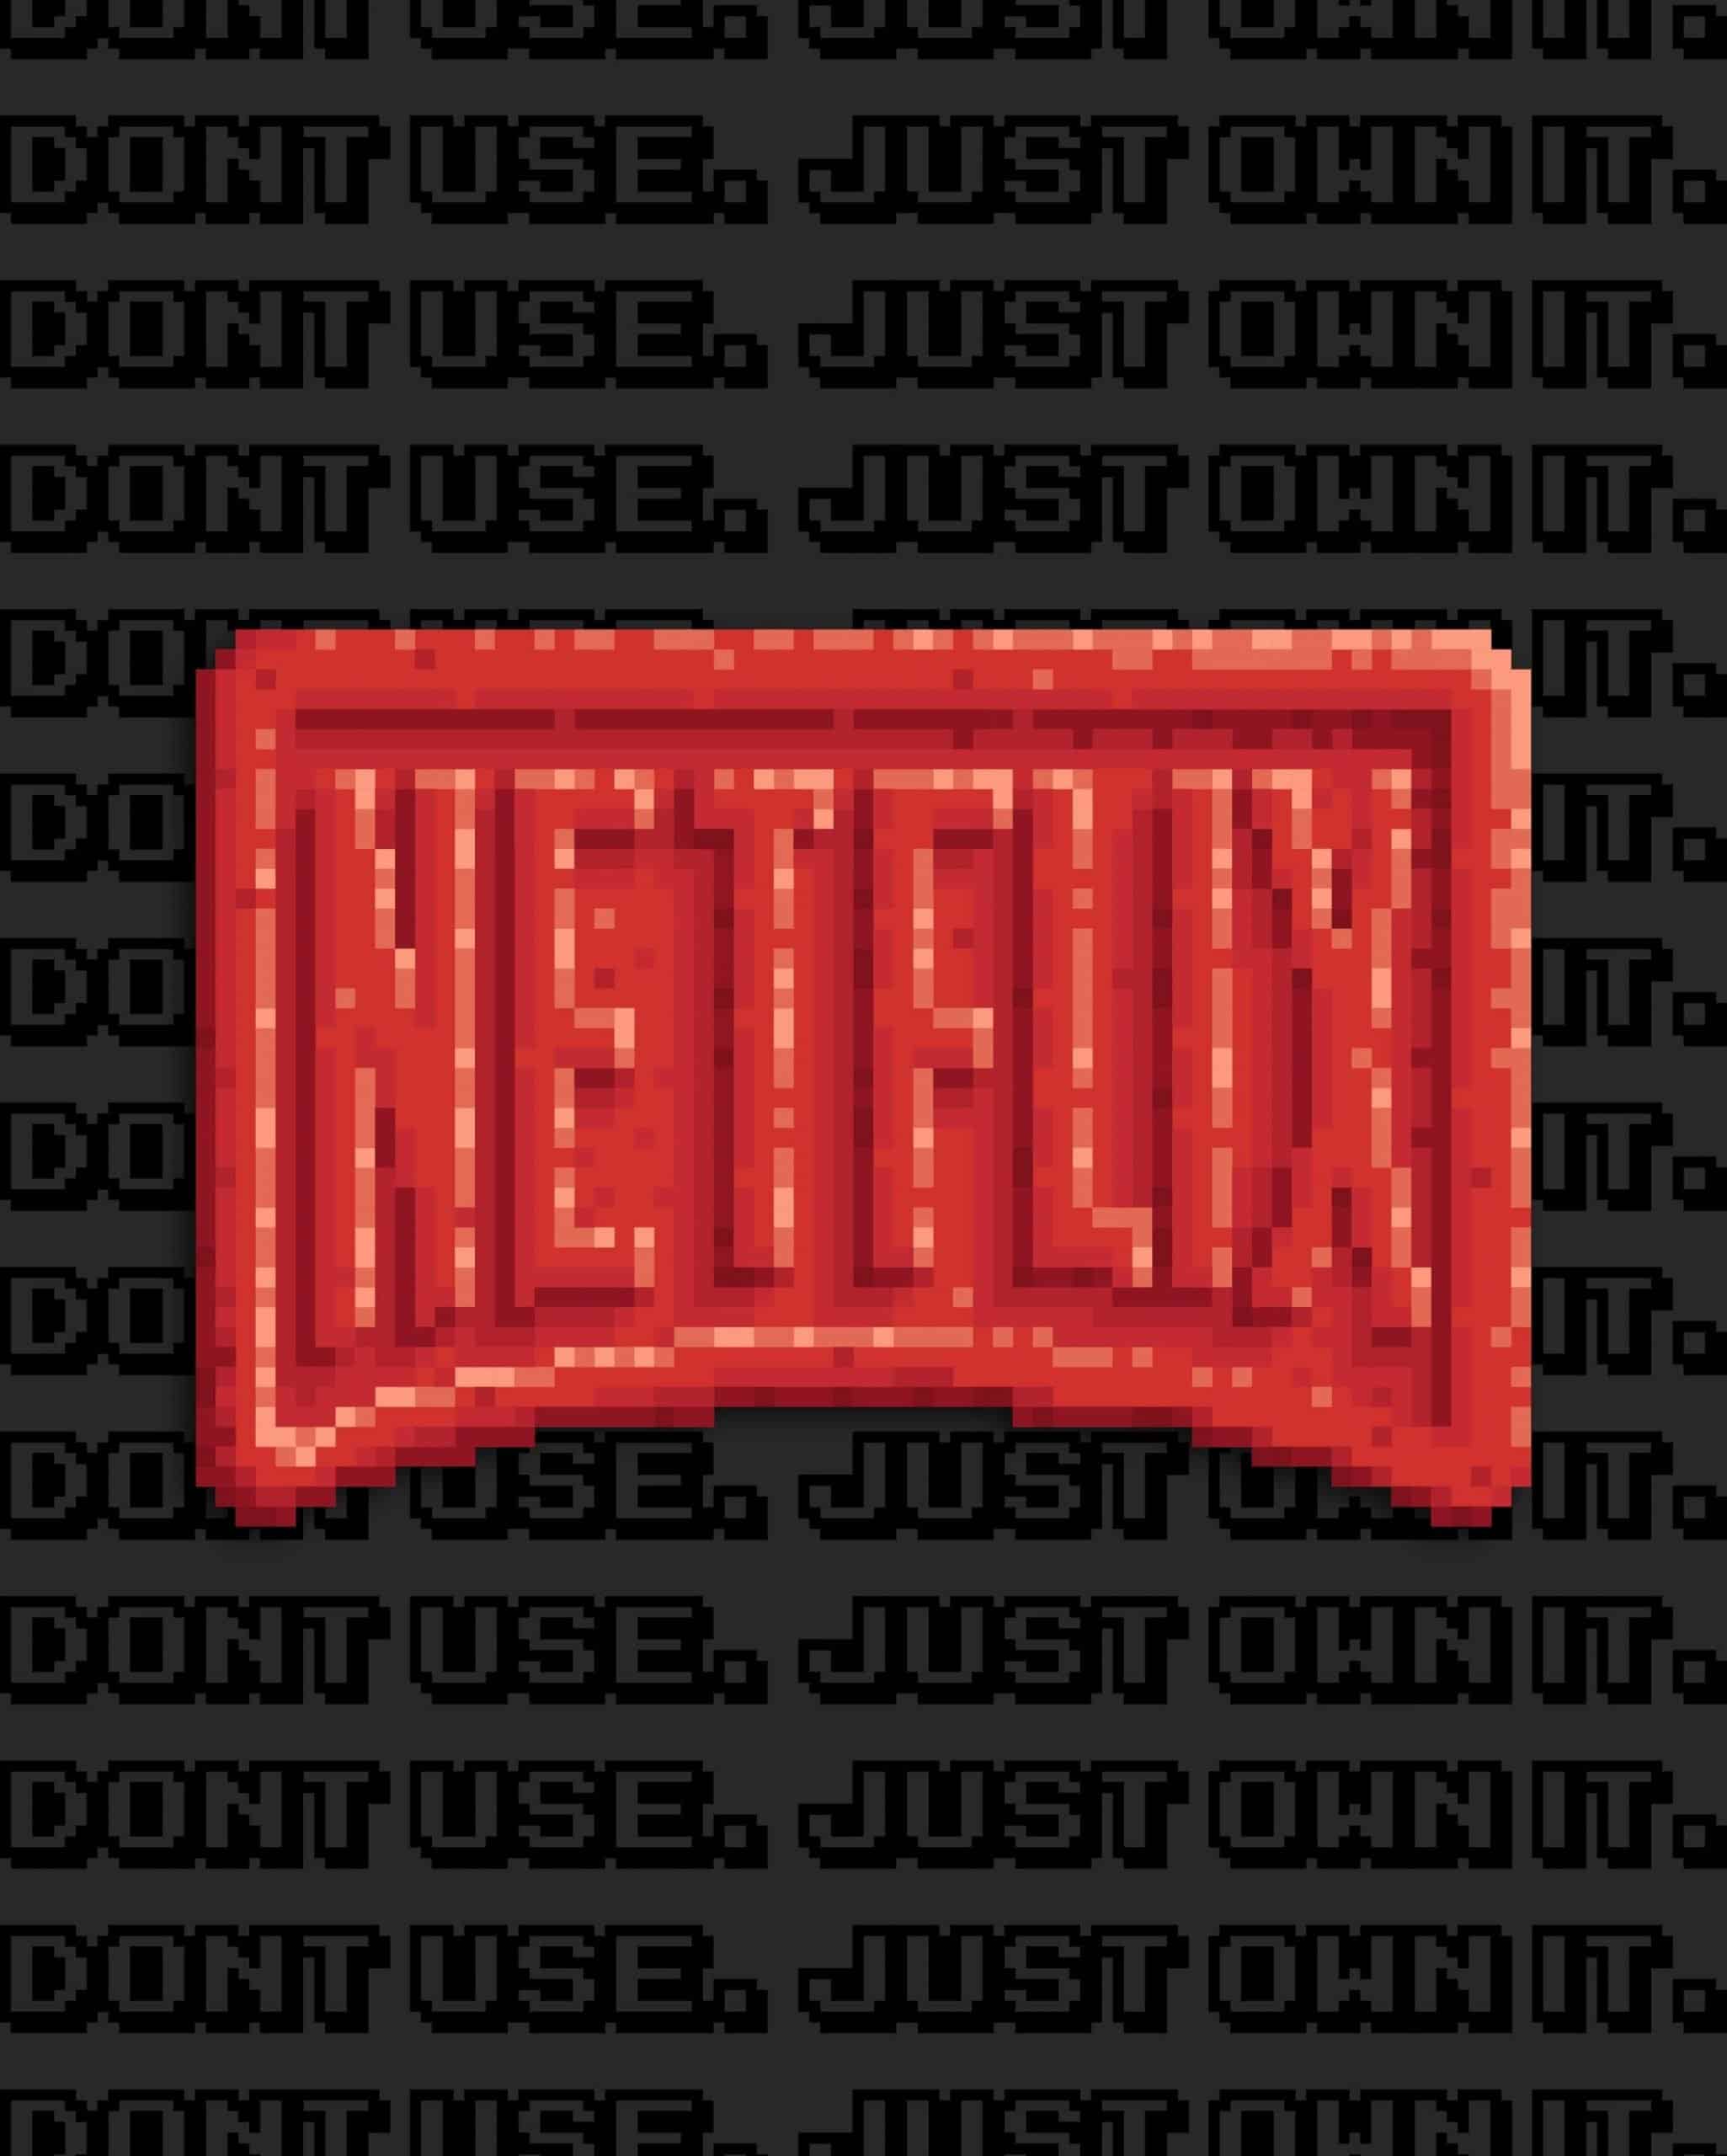 PIXXTASY NFT featuring Netflix logo